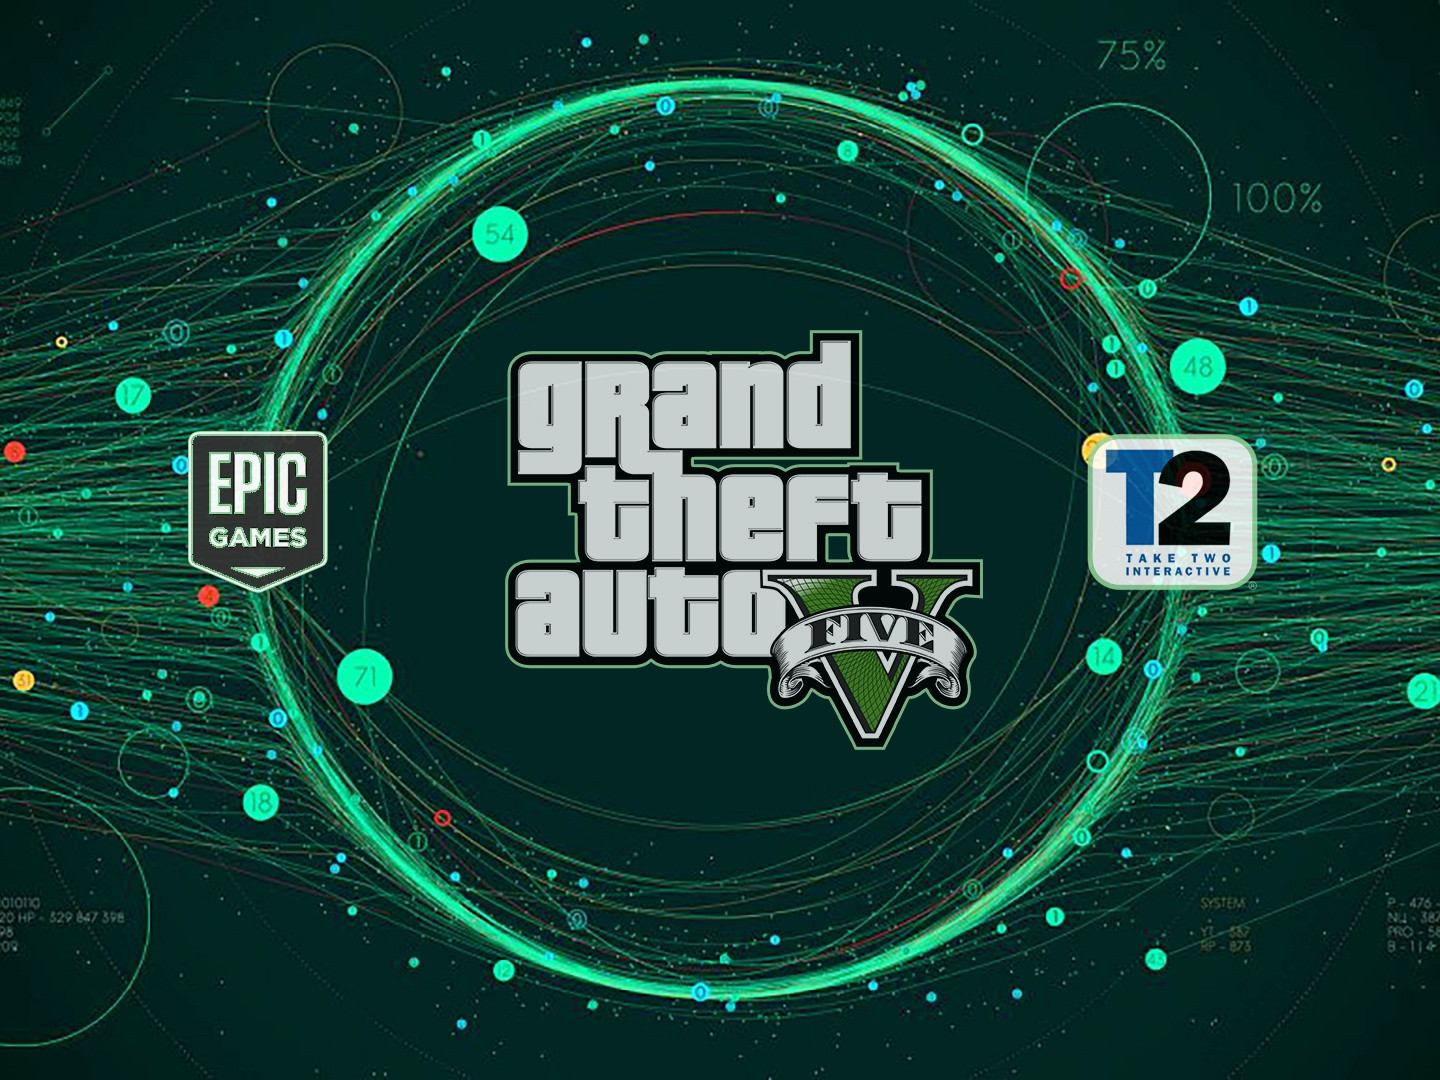 L'Epic Games Sorte cartonne grâce à GTA V